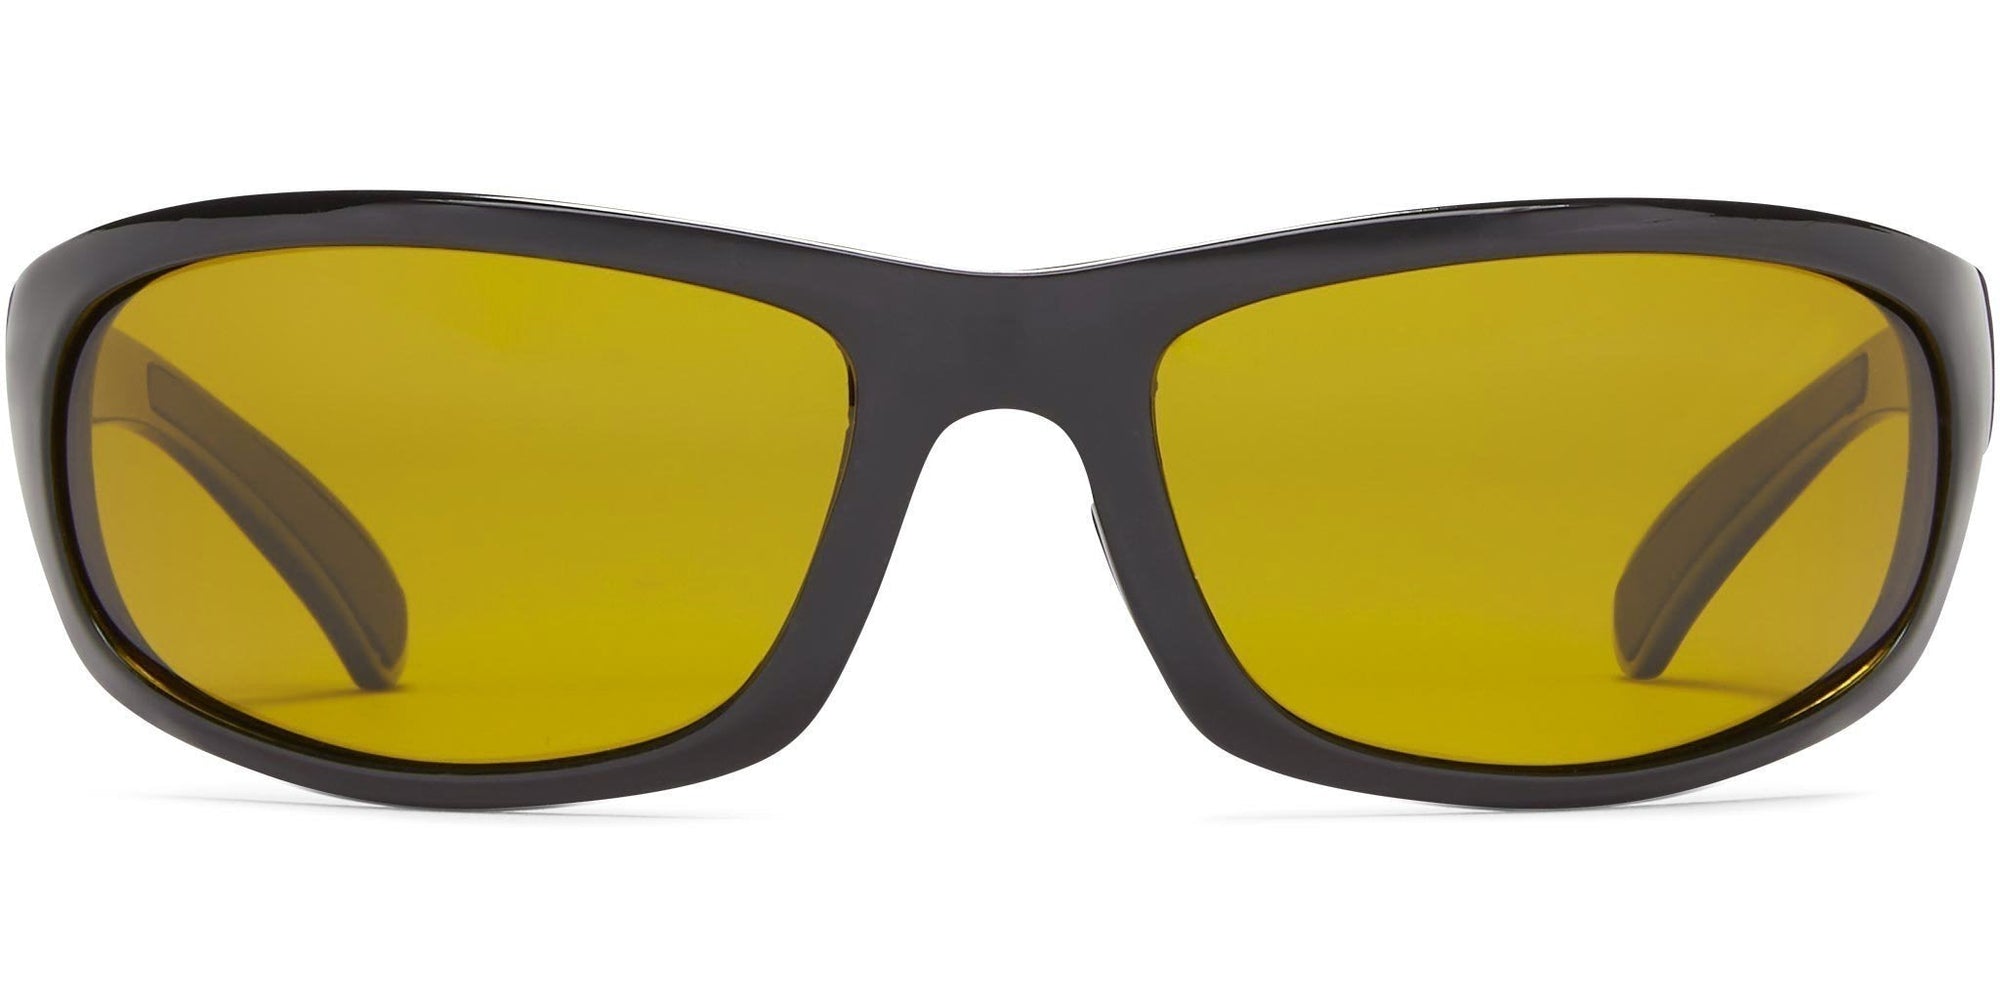 Permit - Shiny Black/Amber Lens - Polarized Sunglasses